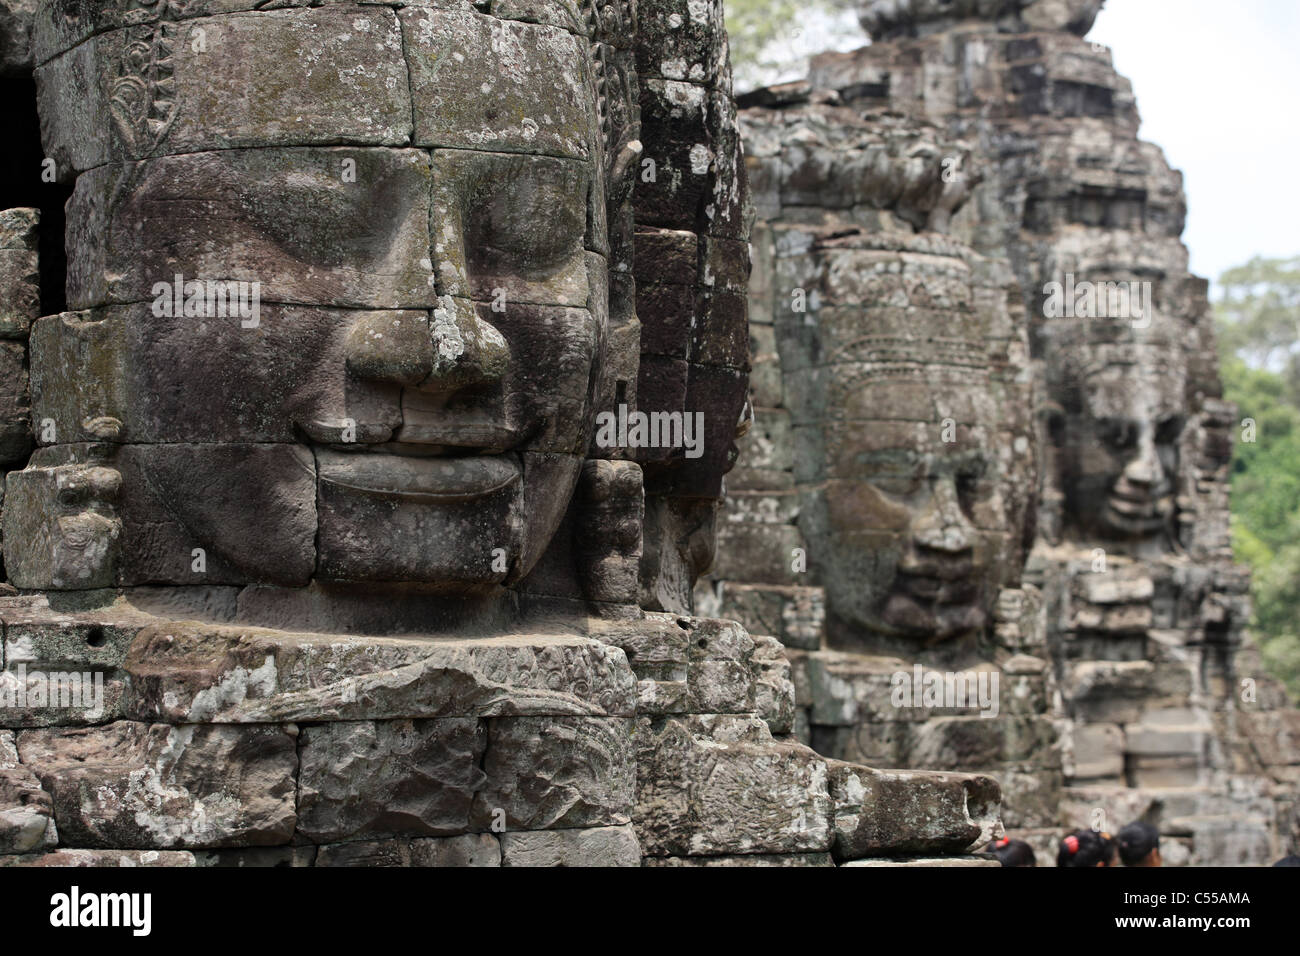 Teste scolpite a tempio Bayon, Angkor Wat complessa, Siem Reap, Cambogia Foto Stock